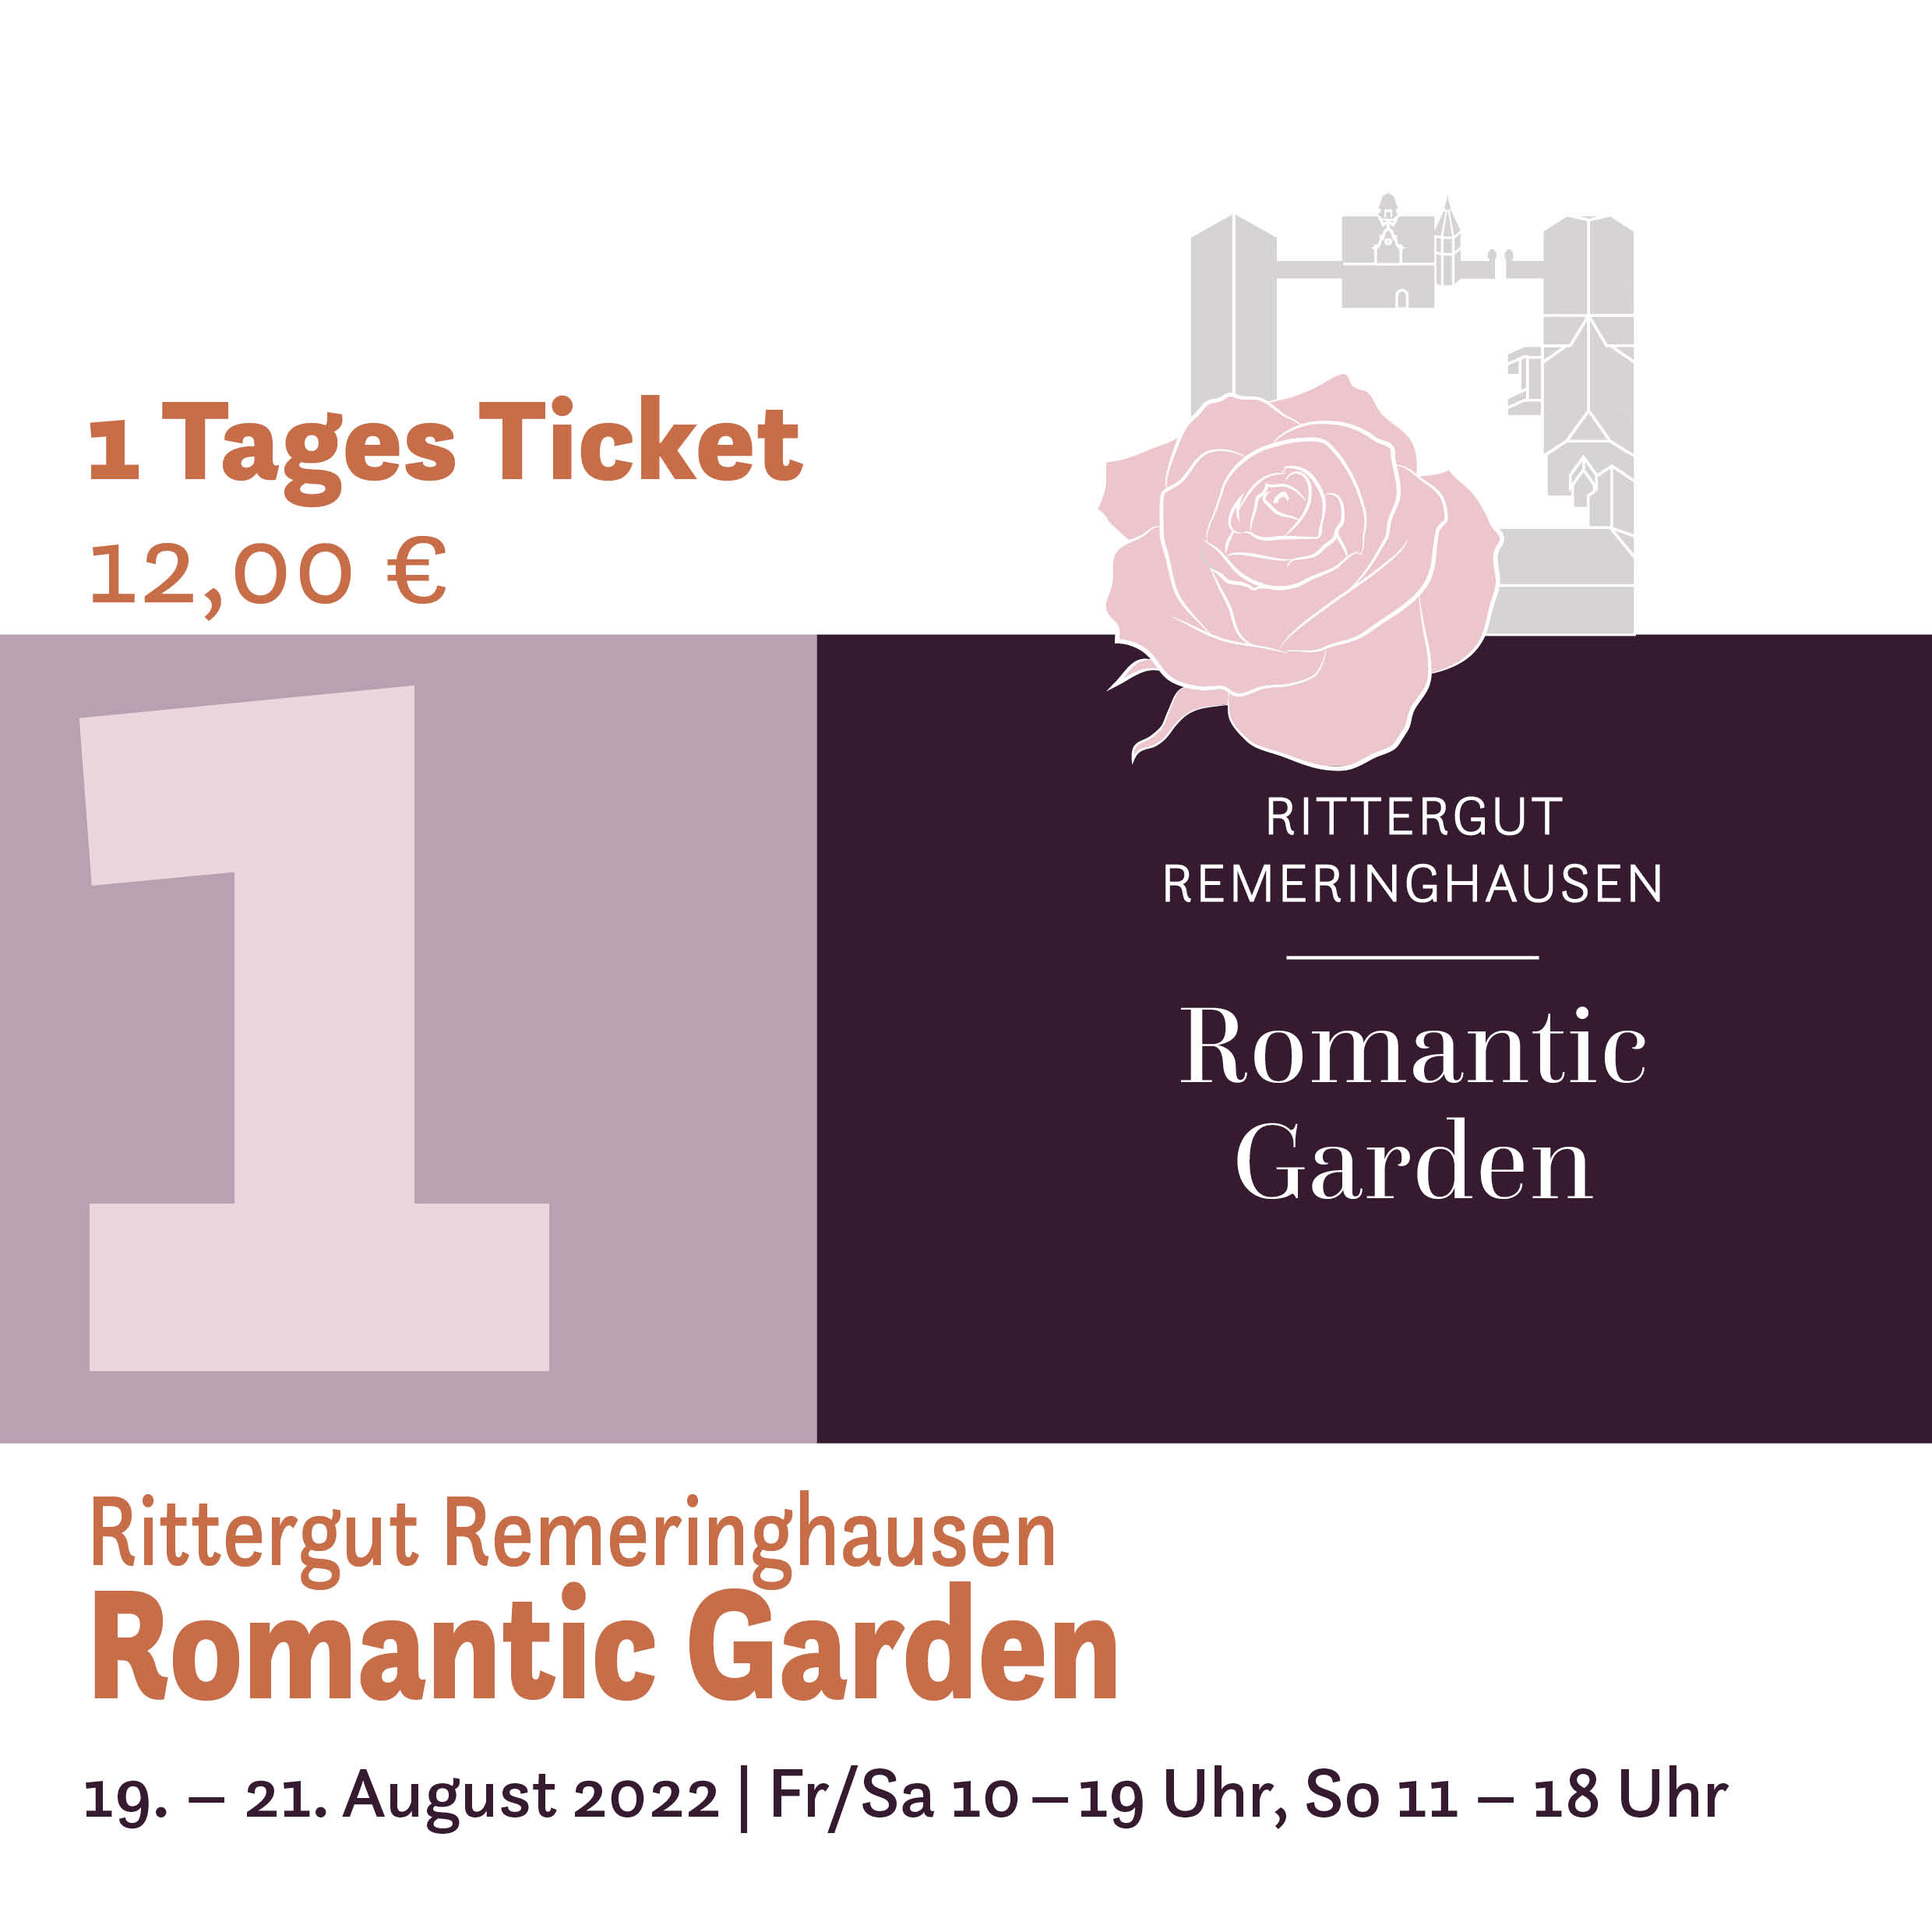 Romantic Garden 2022 - 1 Tages Ticket